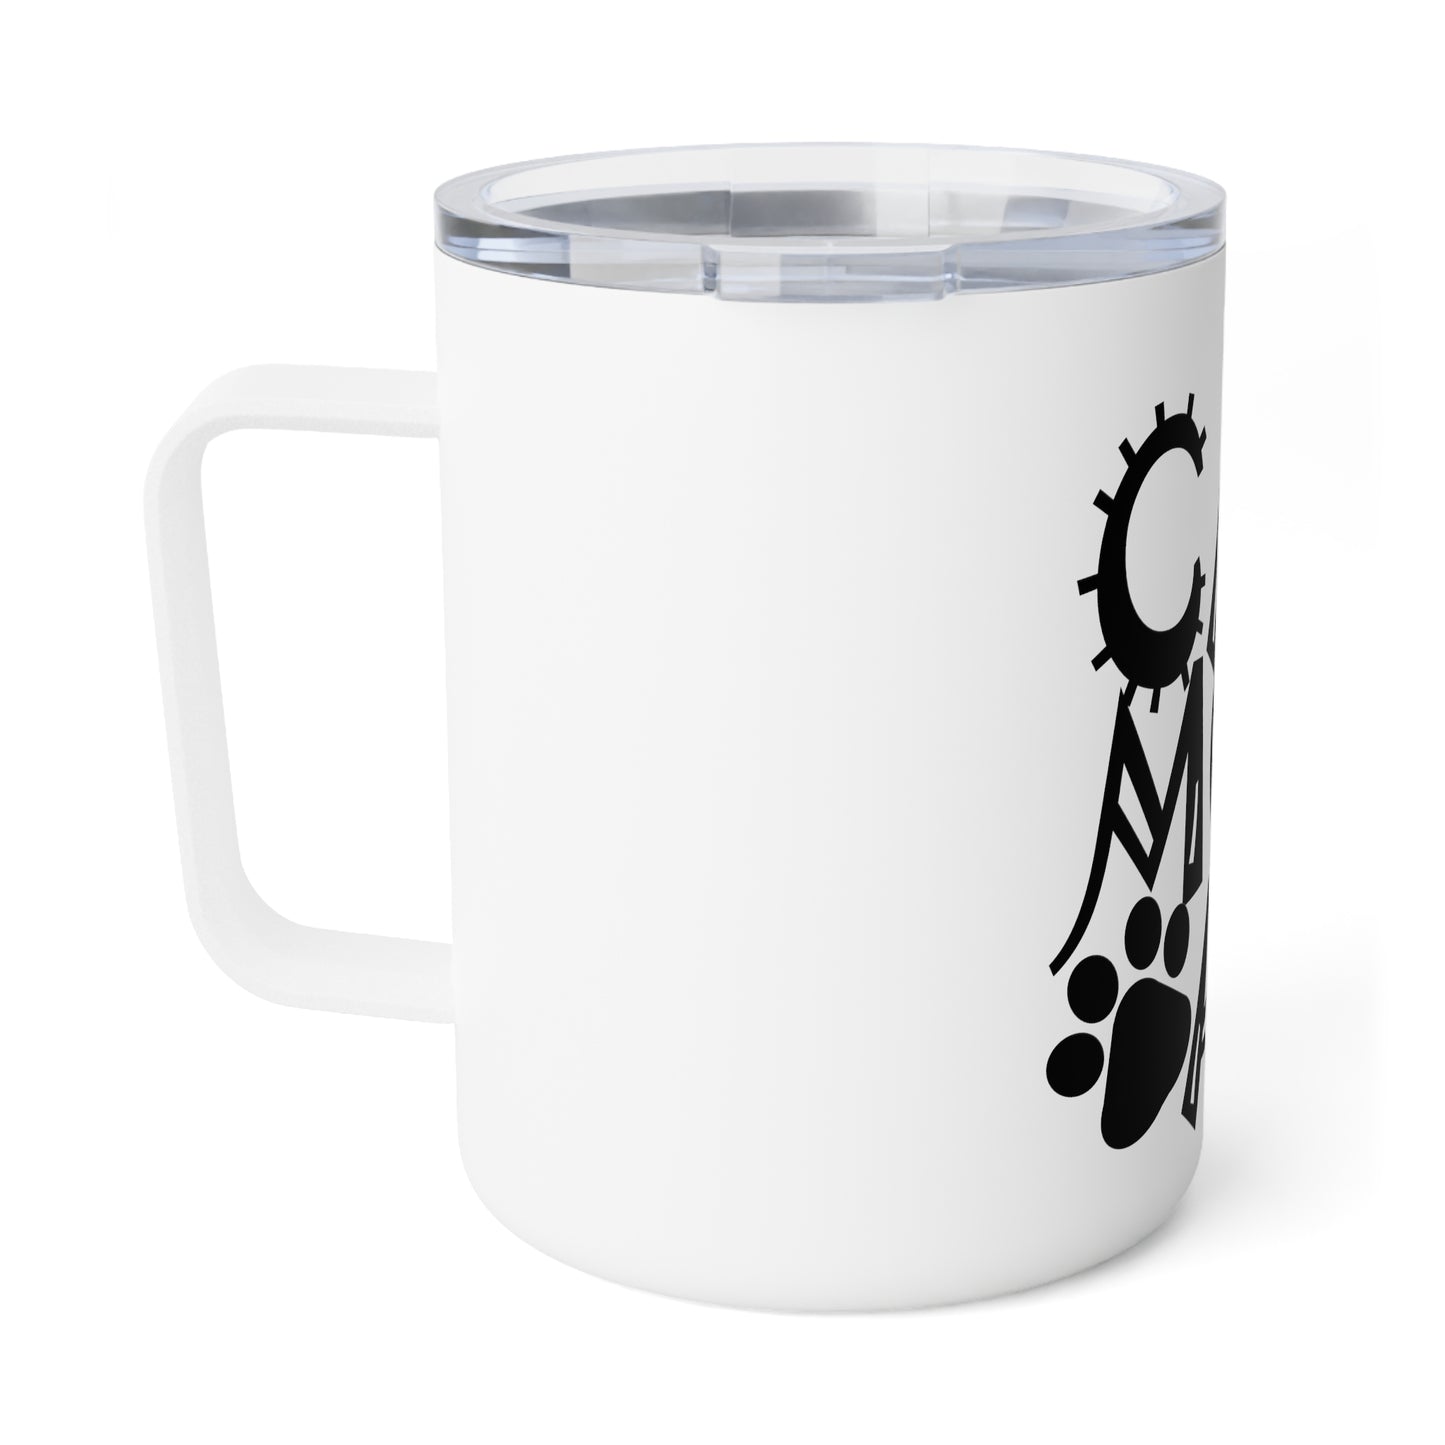 Cat Mom AF Insulated Coffee Mug, 10oz